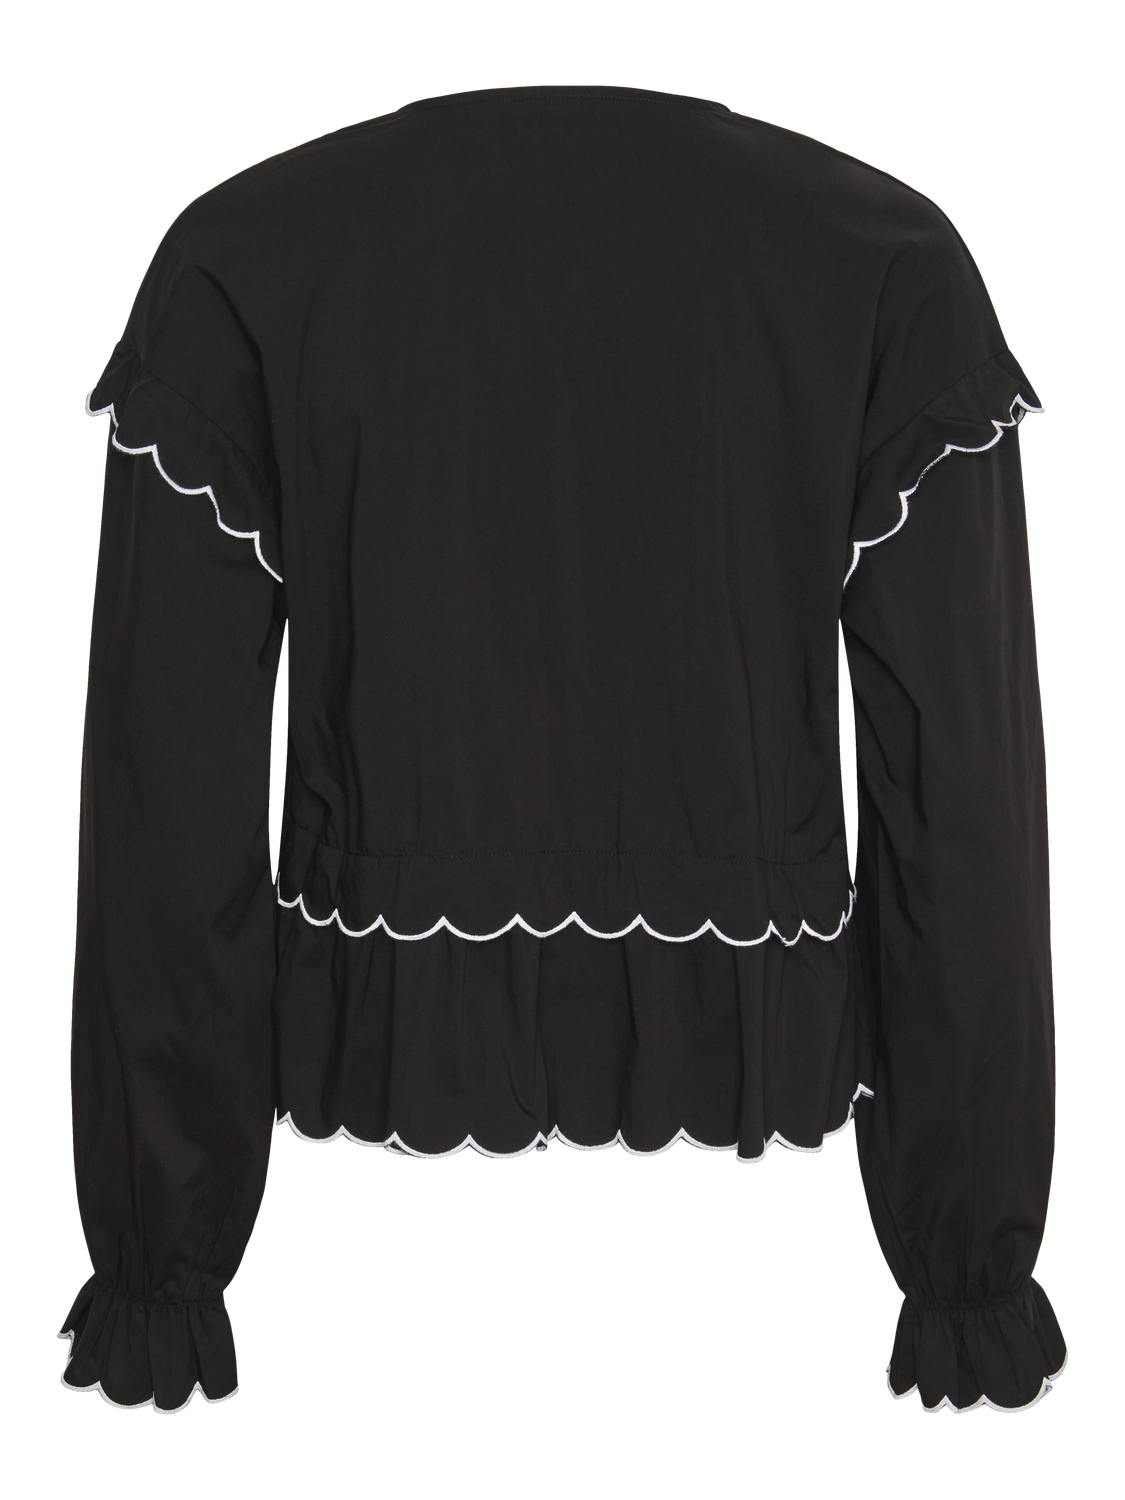 PCLUNA T-Shirts & Tops - Black